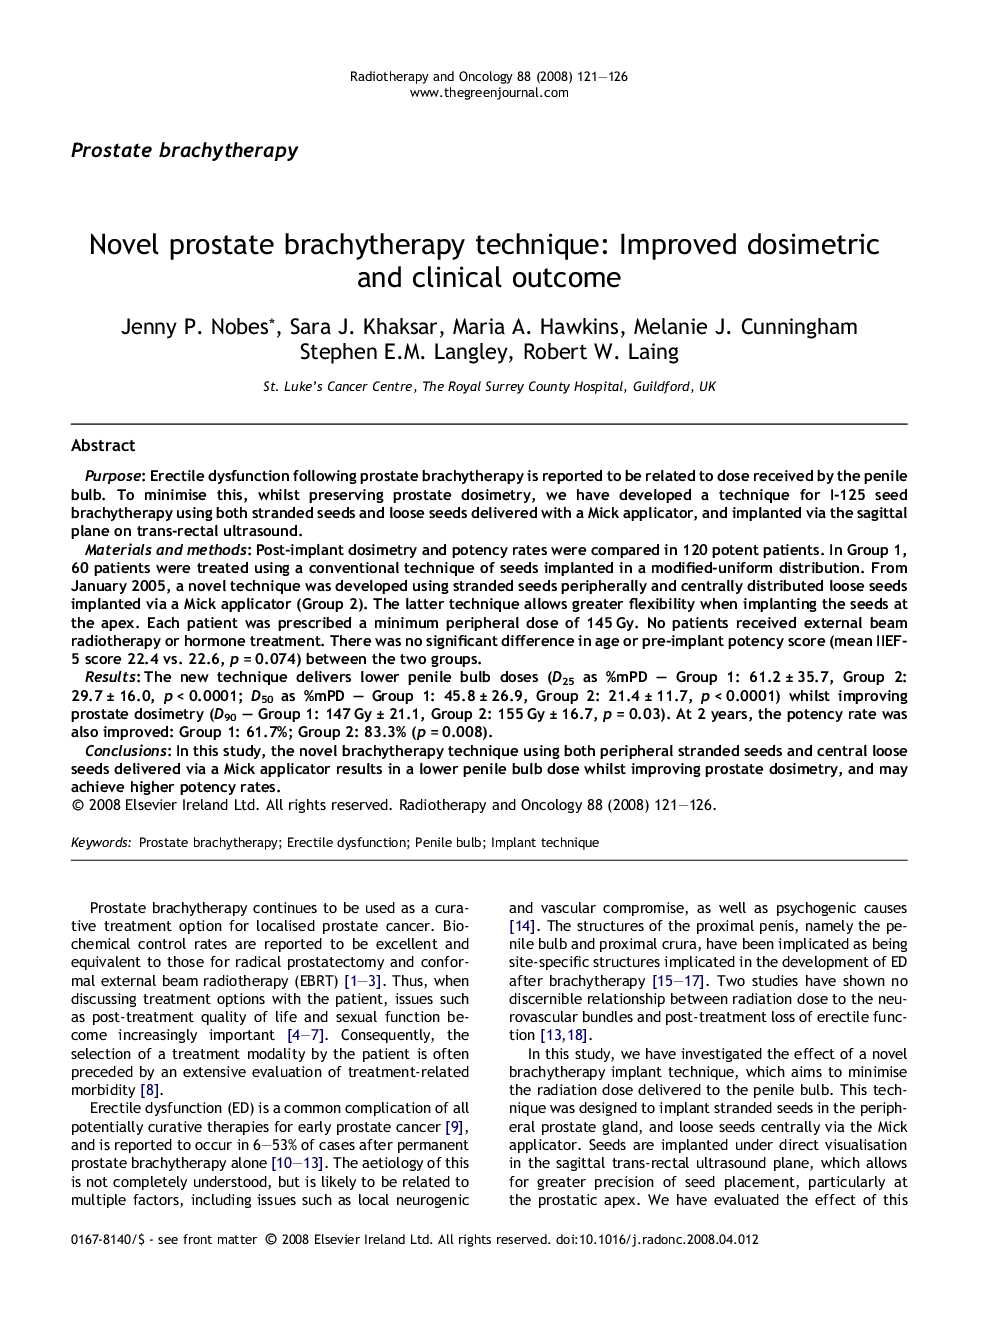 Novel prostate brachytherapy technique: Improved dosimetric and clinical outcome